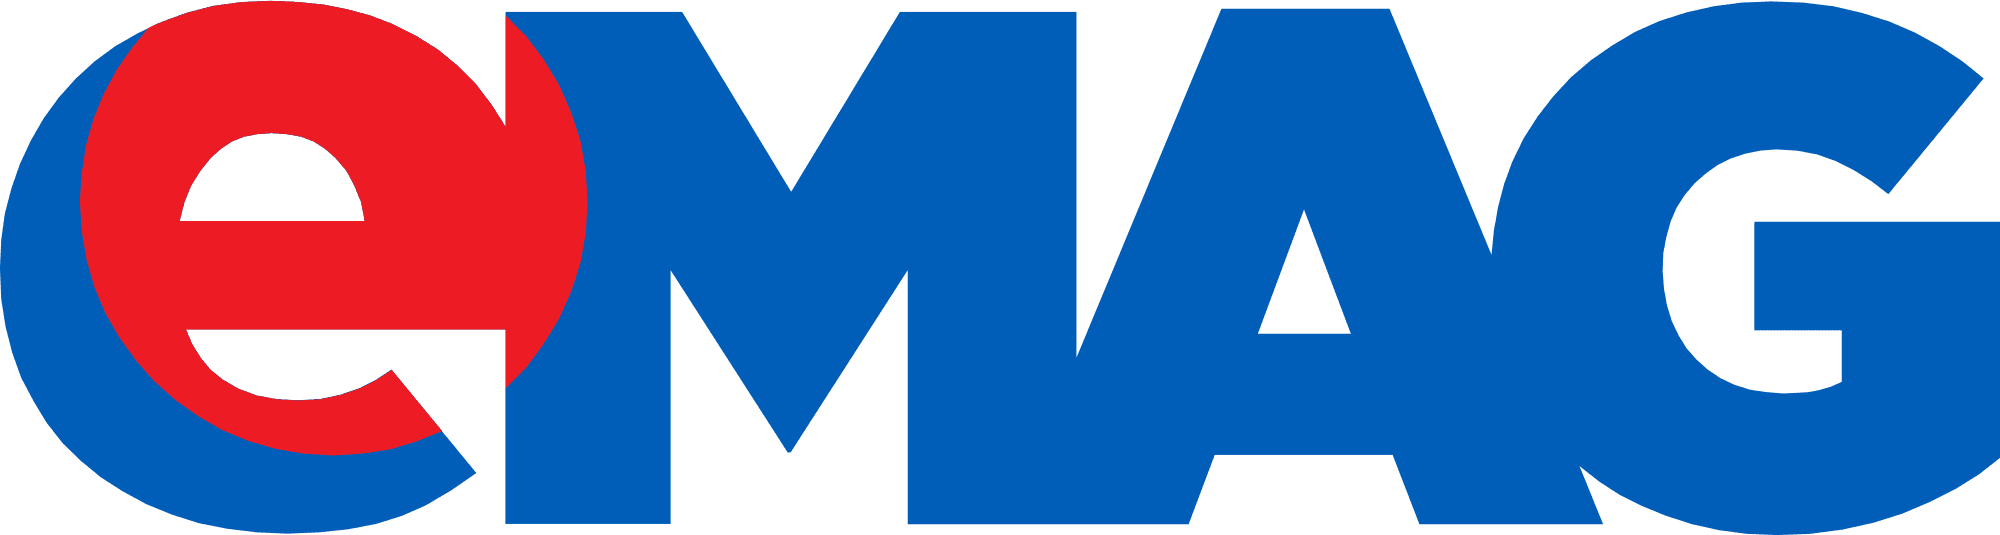 eMAG Brand Logo